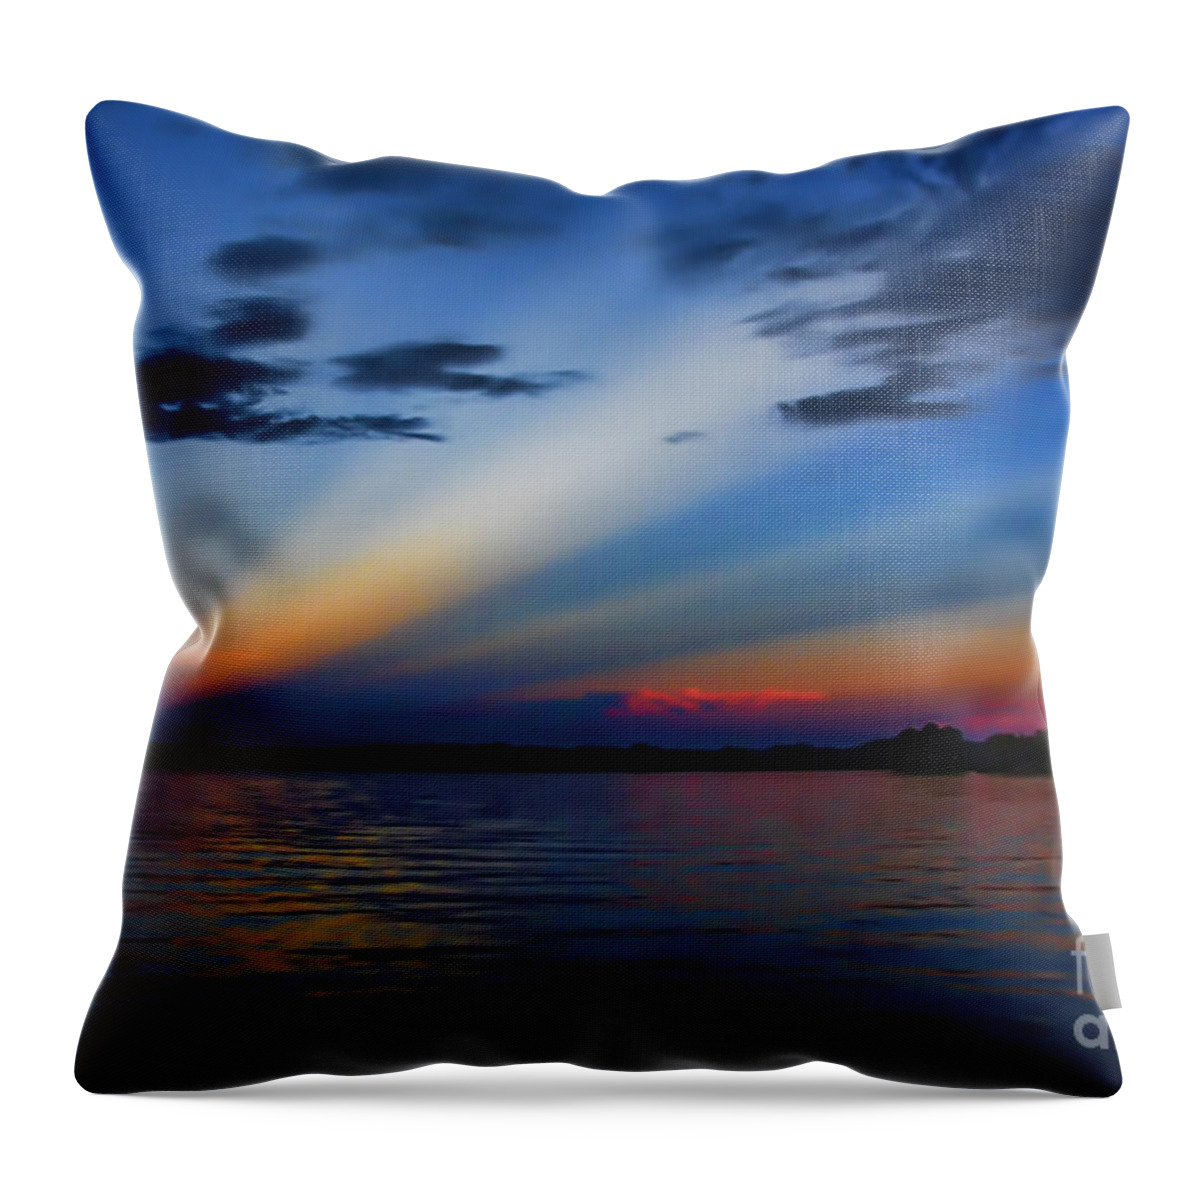 Blue Throw Pillow featuring the photograph Blue Sunset by Ken Johnson